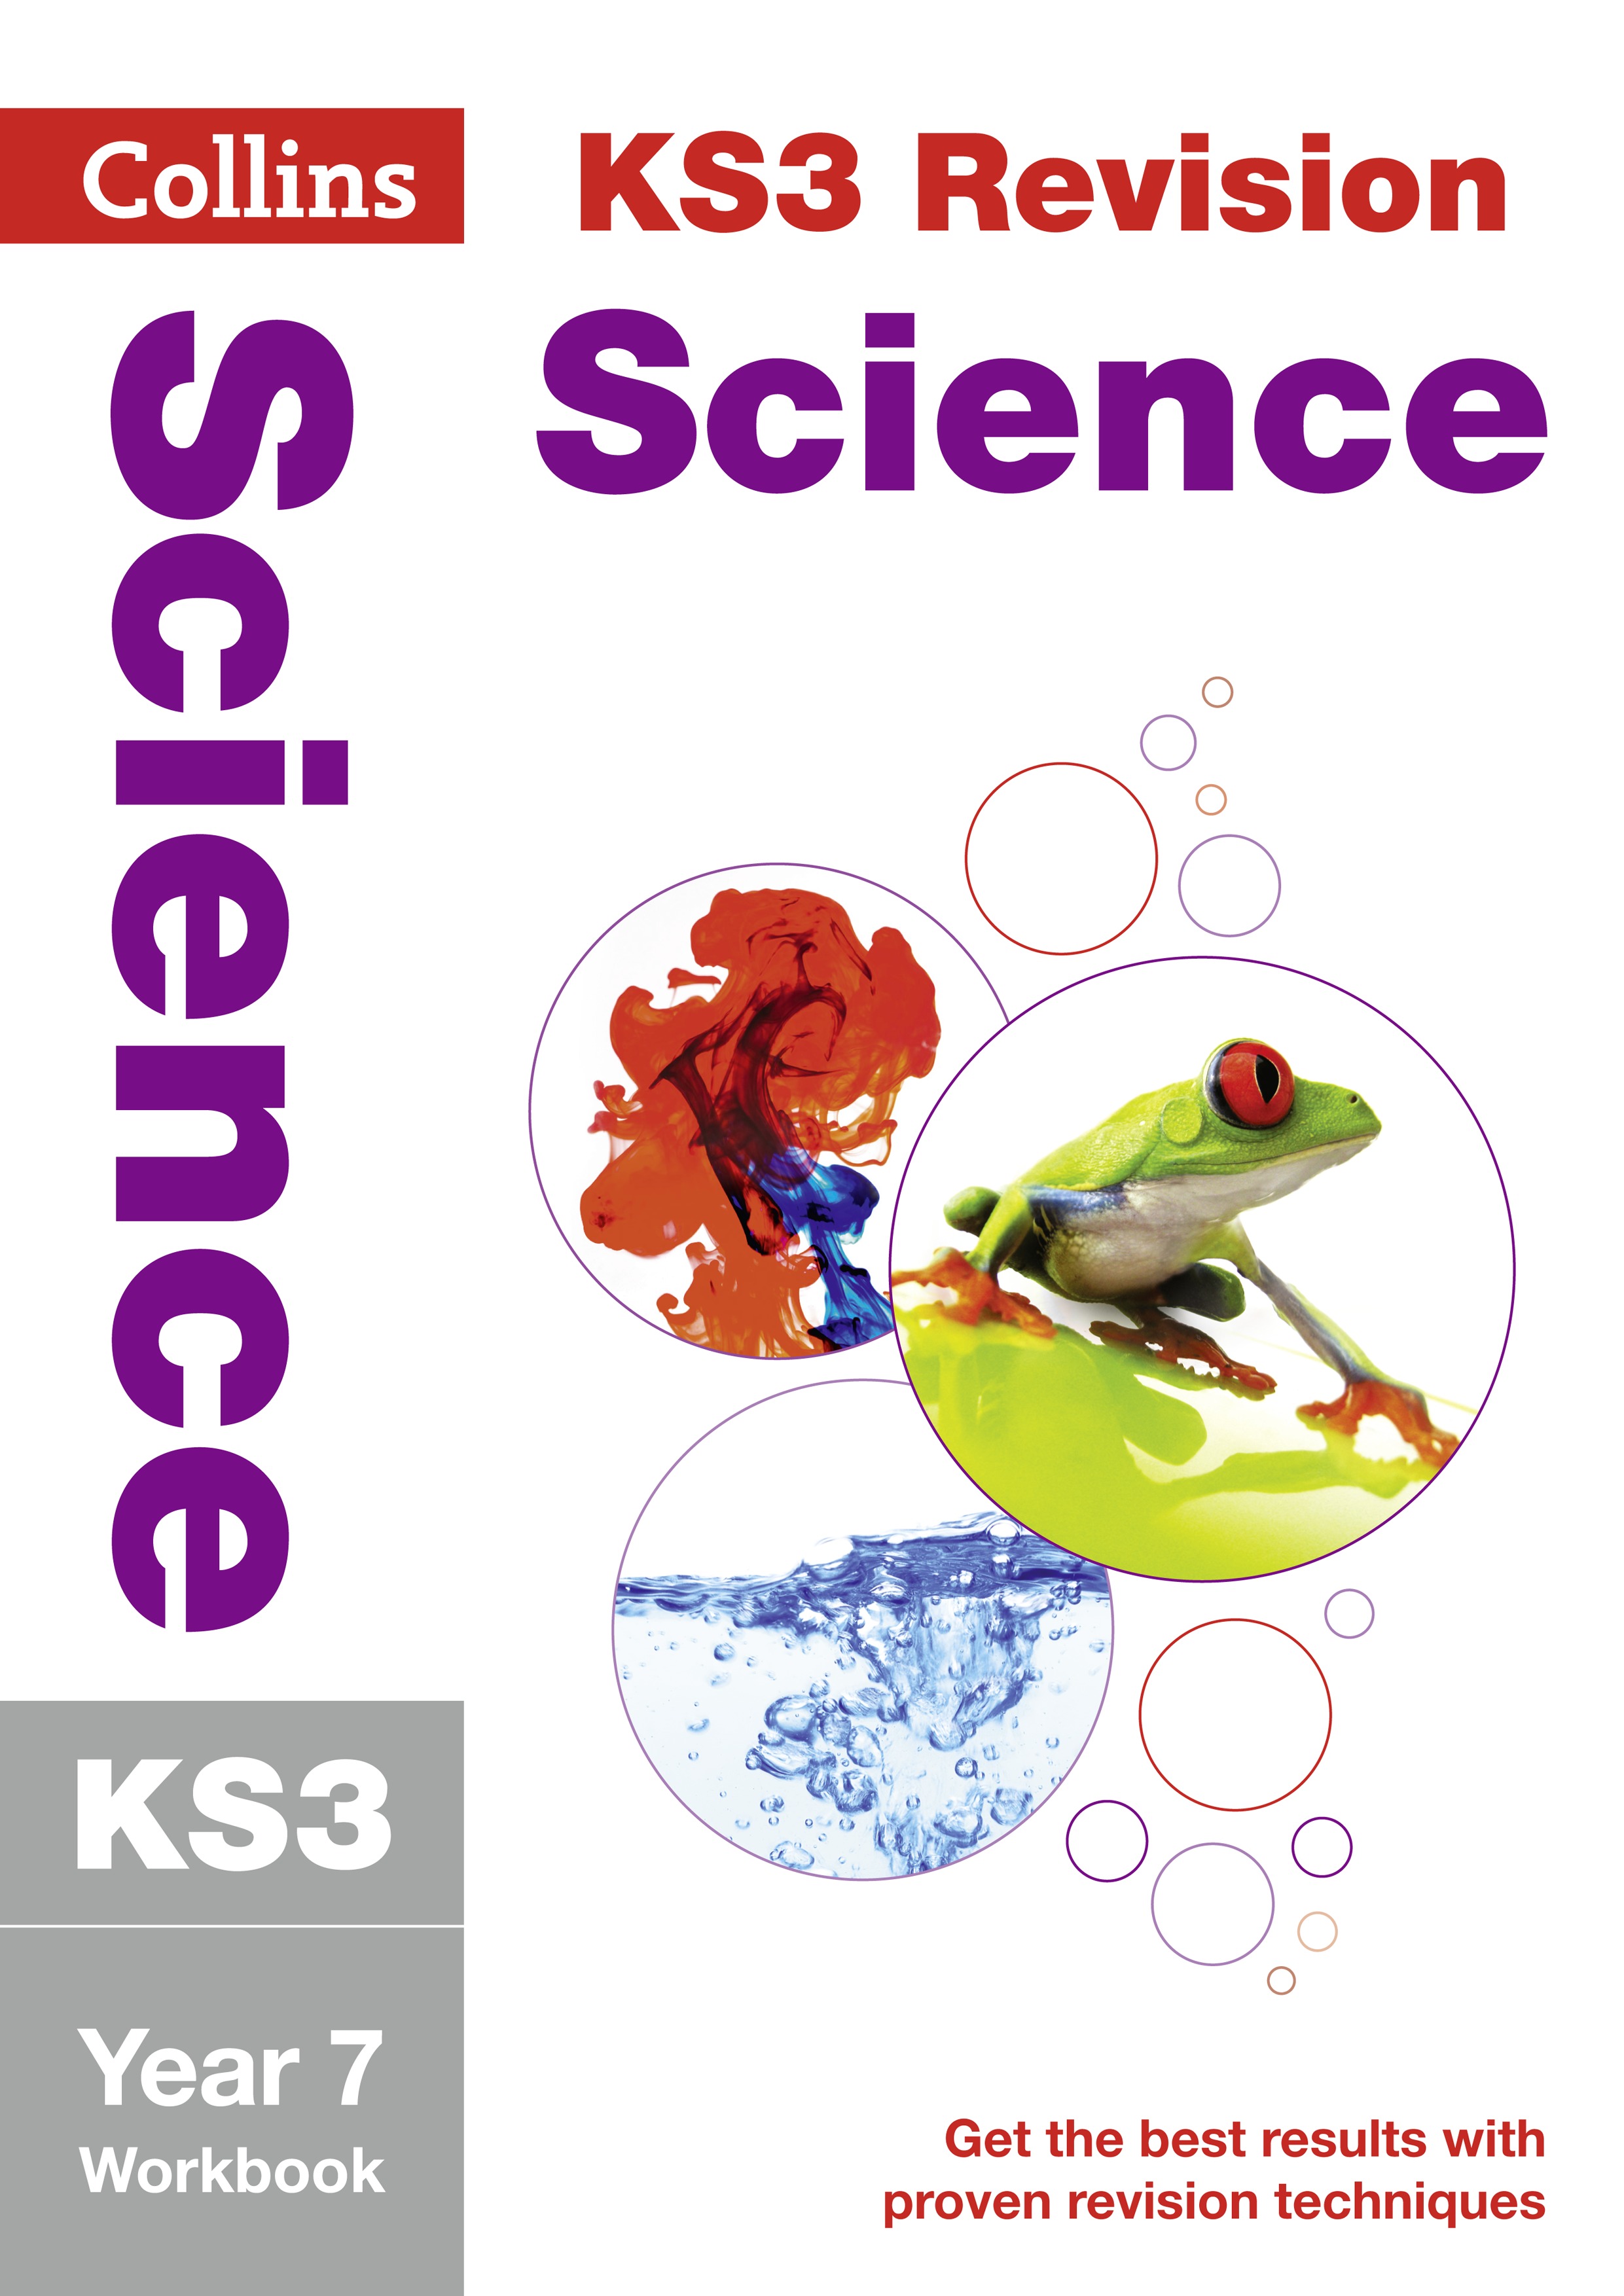 ks3-revision-science-year-7-workbook